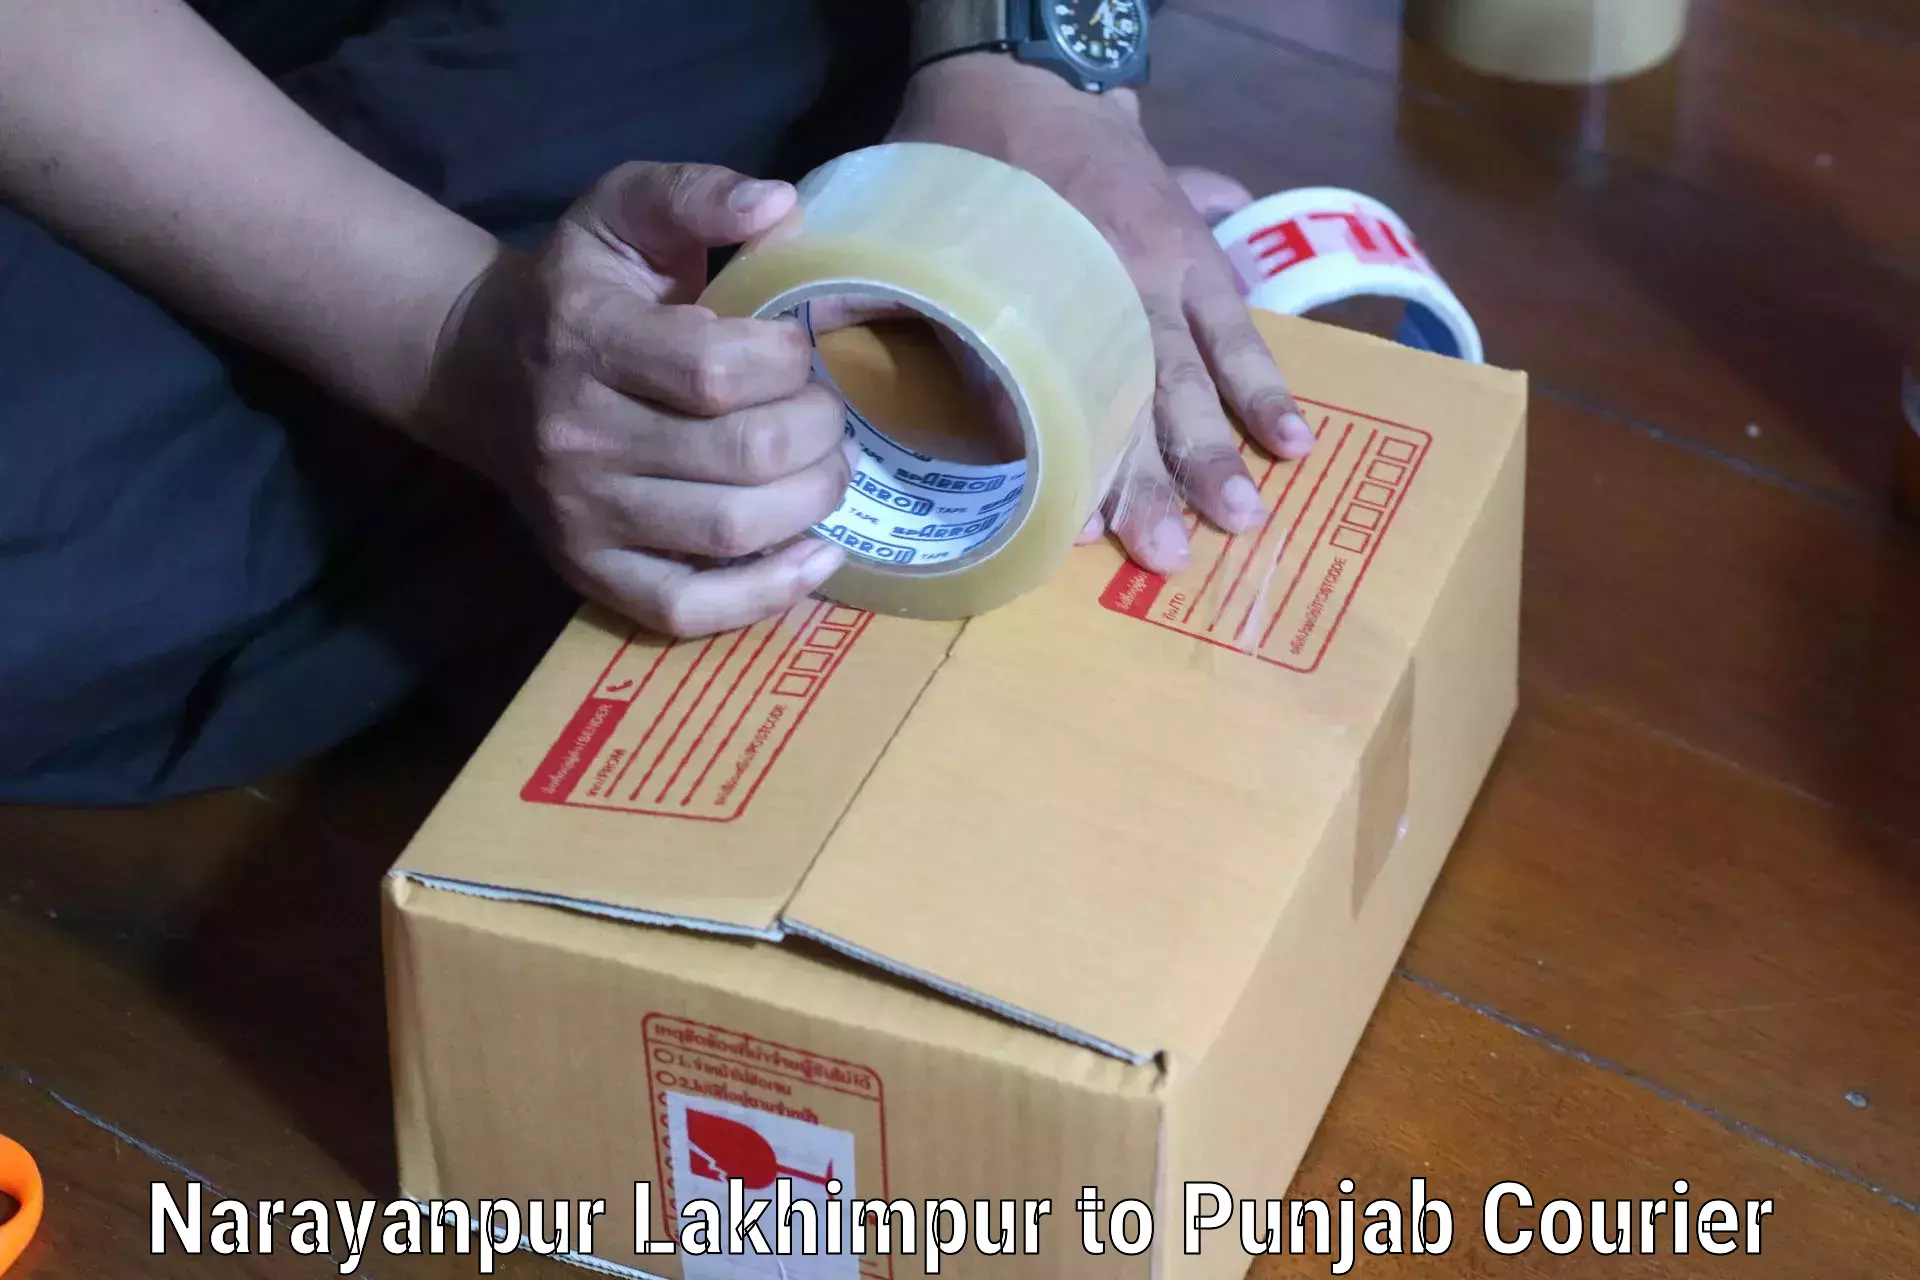 High-priority parcel service Narayanpur Lakhimpur to Nawanshahr